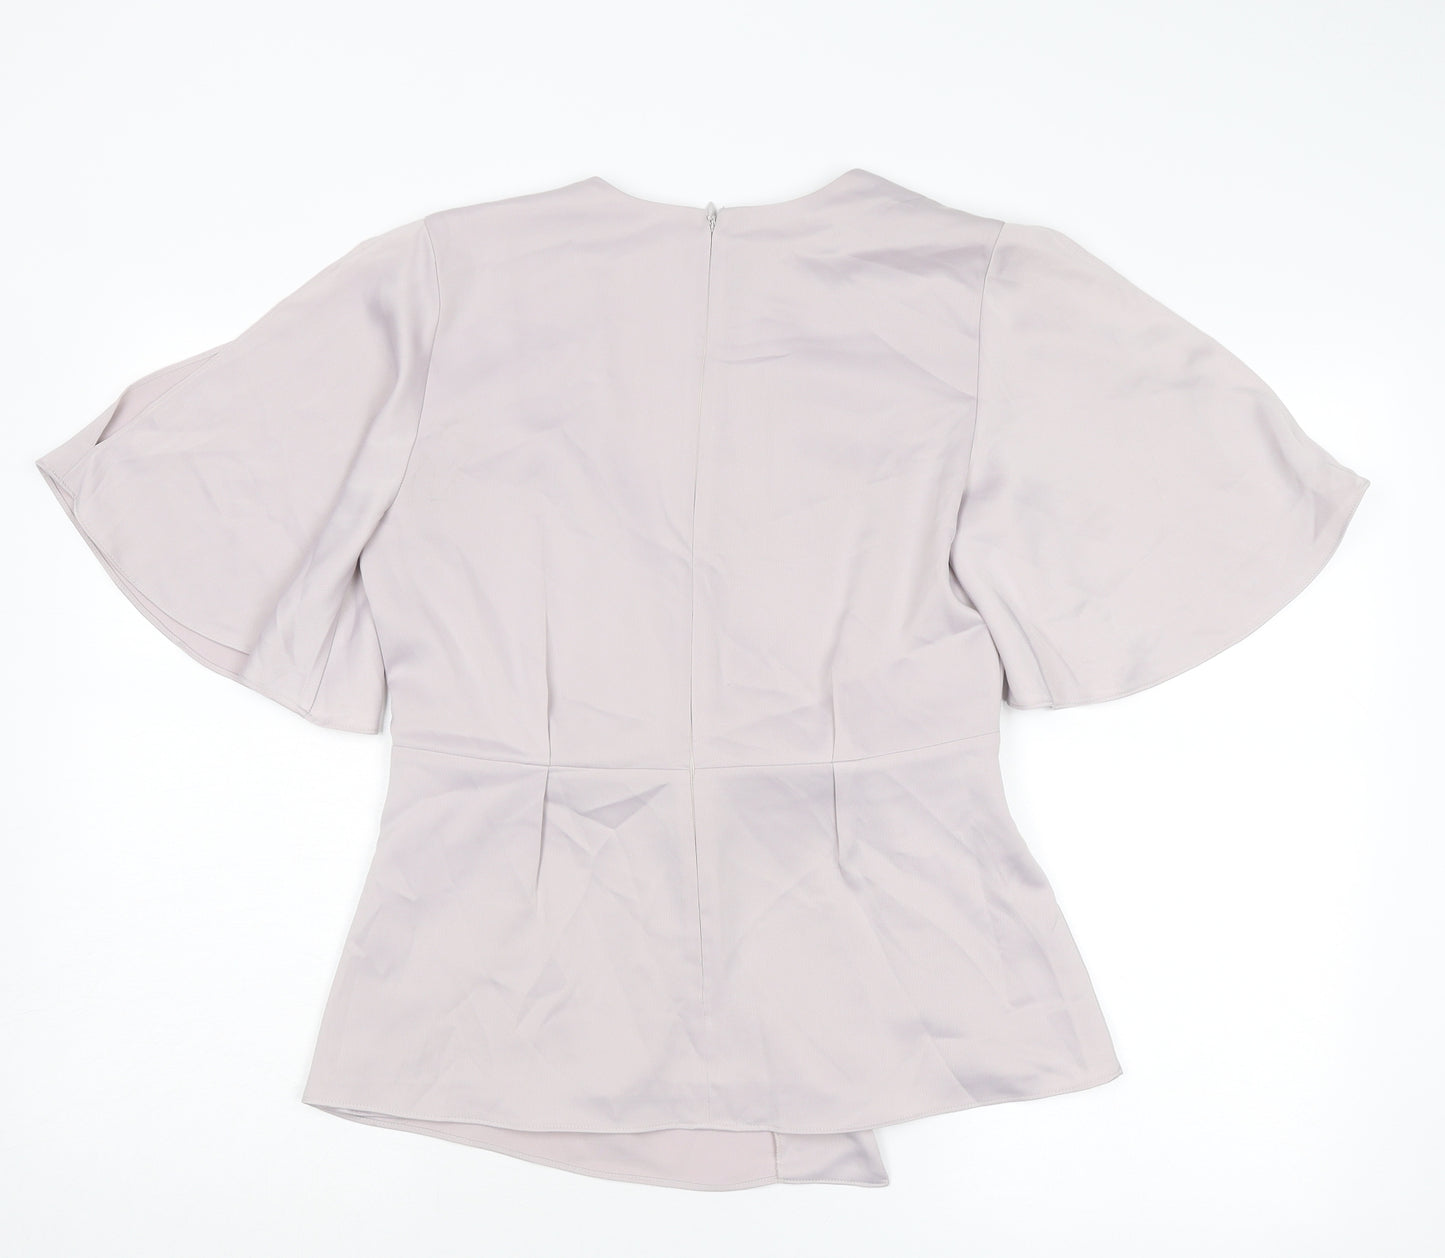 Jacques Vert Womens Grey Polyester Basic Blouse Size 10 V-Neck